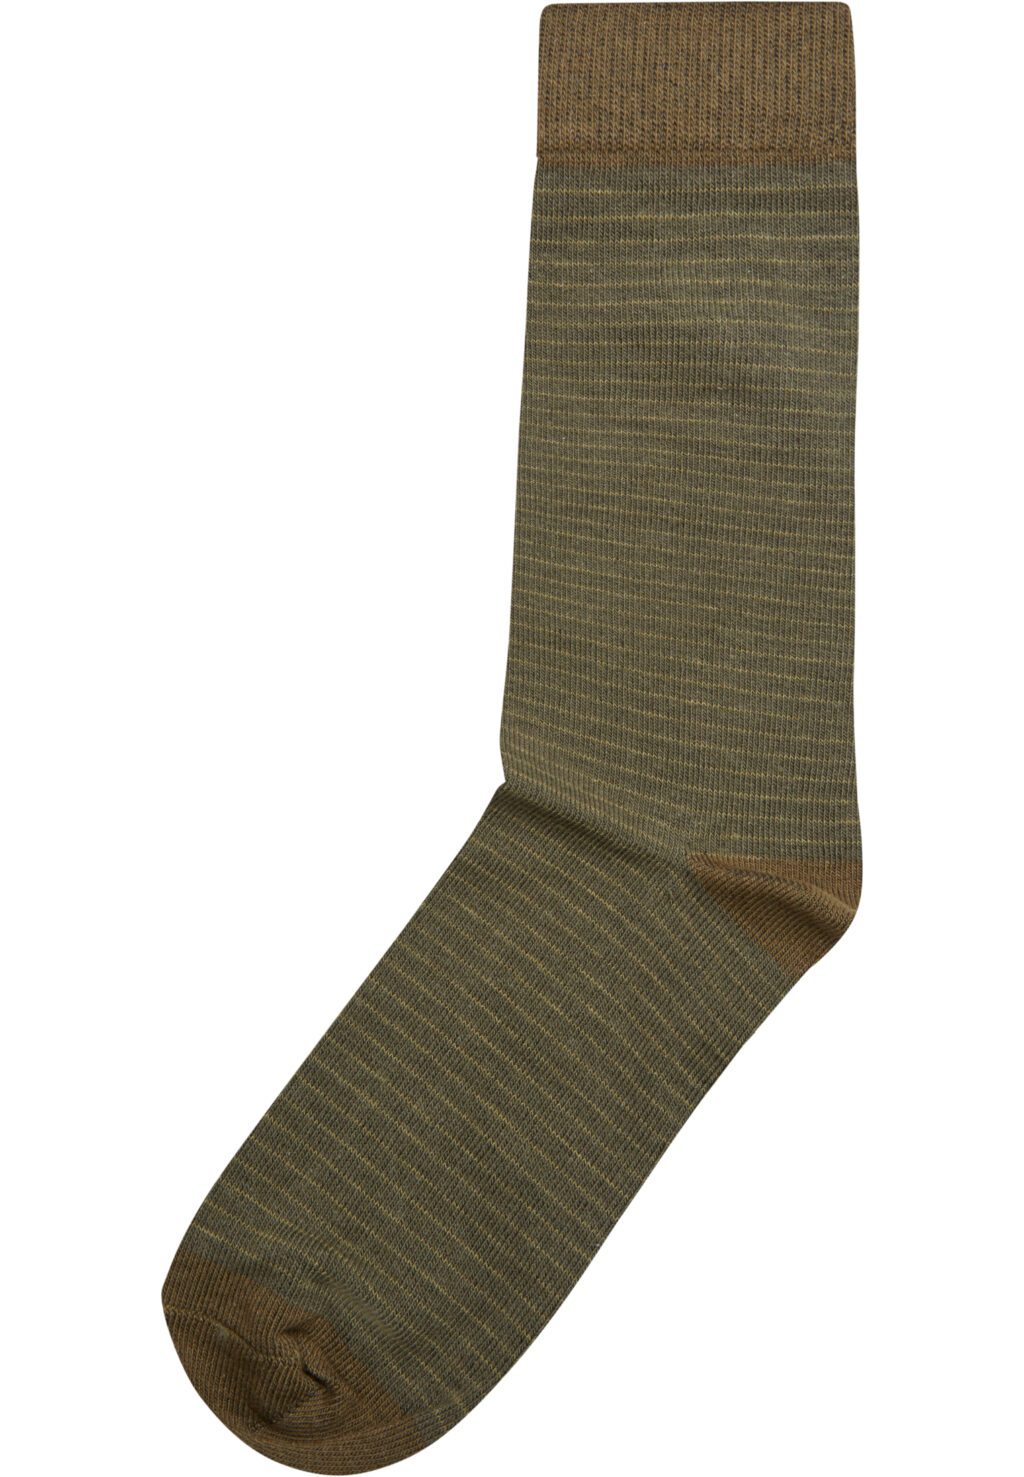 Stripes and Dots Socks 5-Pack black/darkshadow/summerolive/unionbeige TB3744